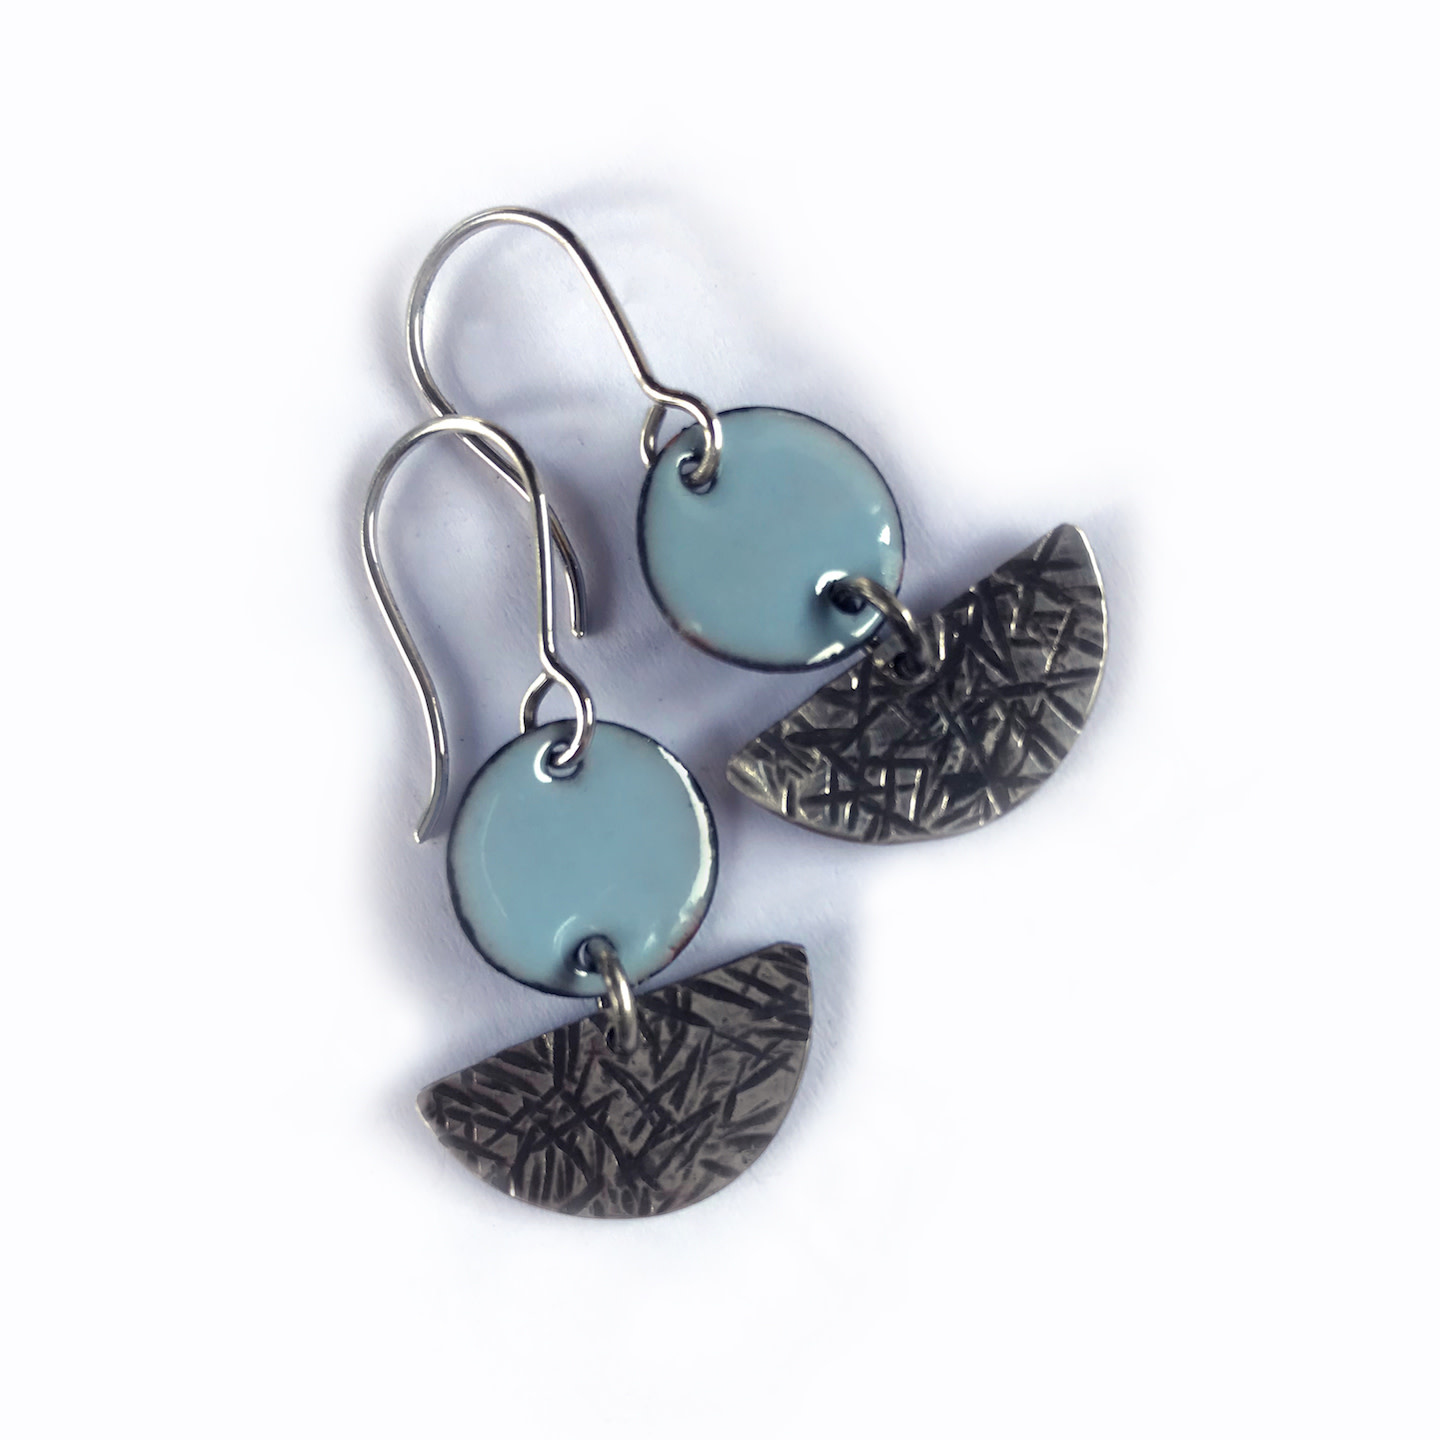 Susan Remnant Earrings - Small, Blue Enamel & Sterling Silver